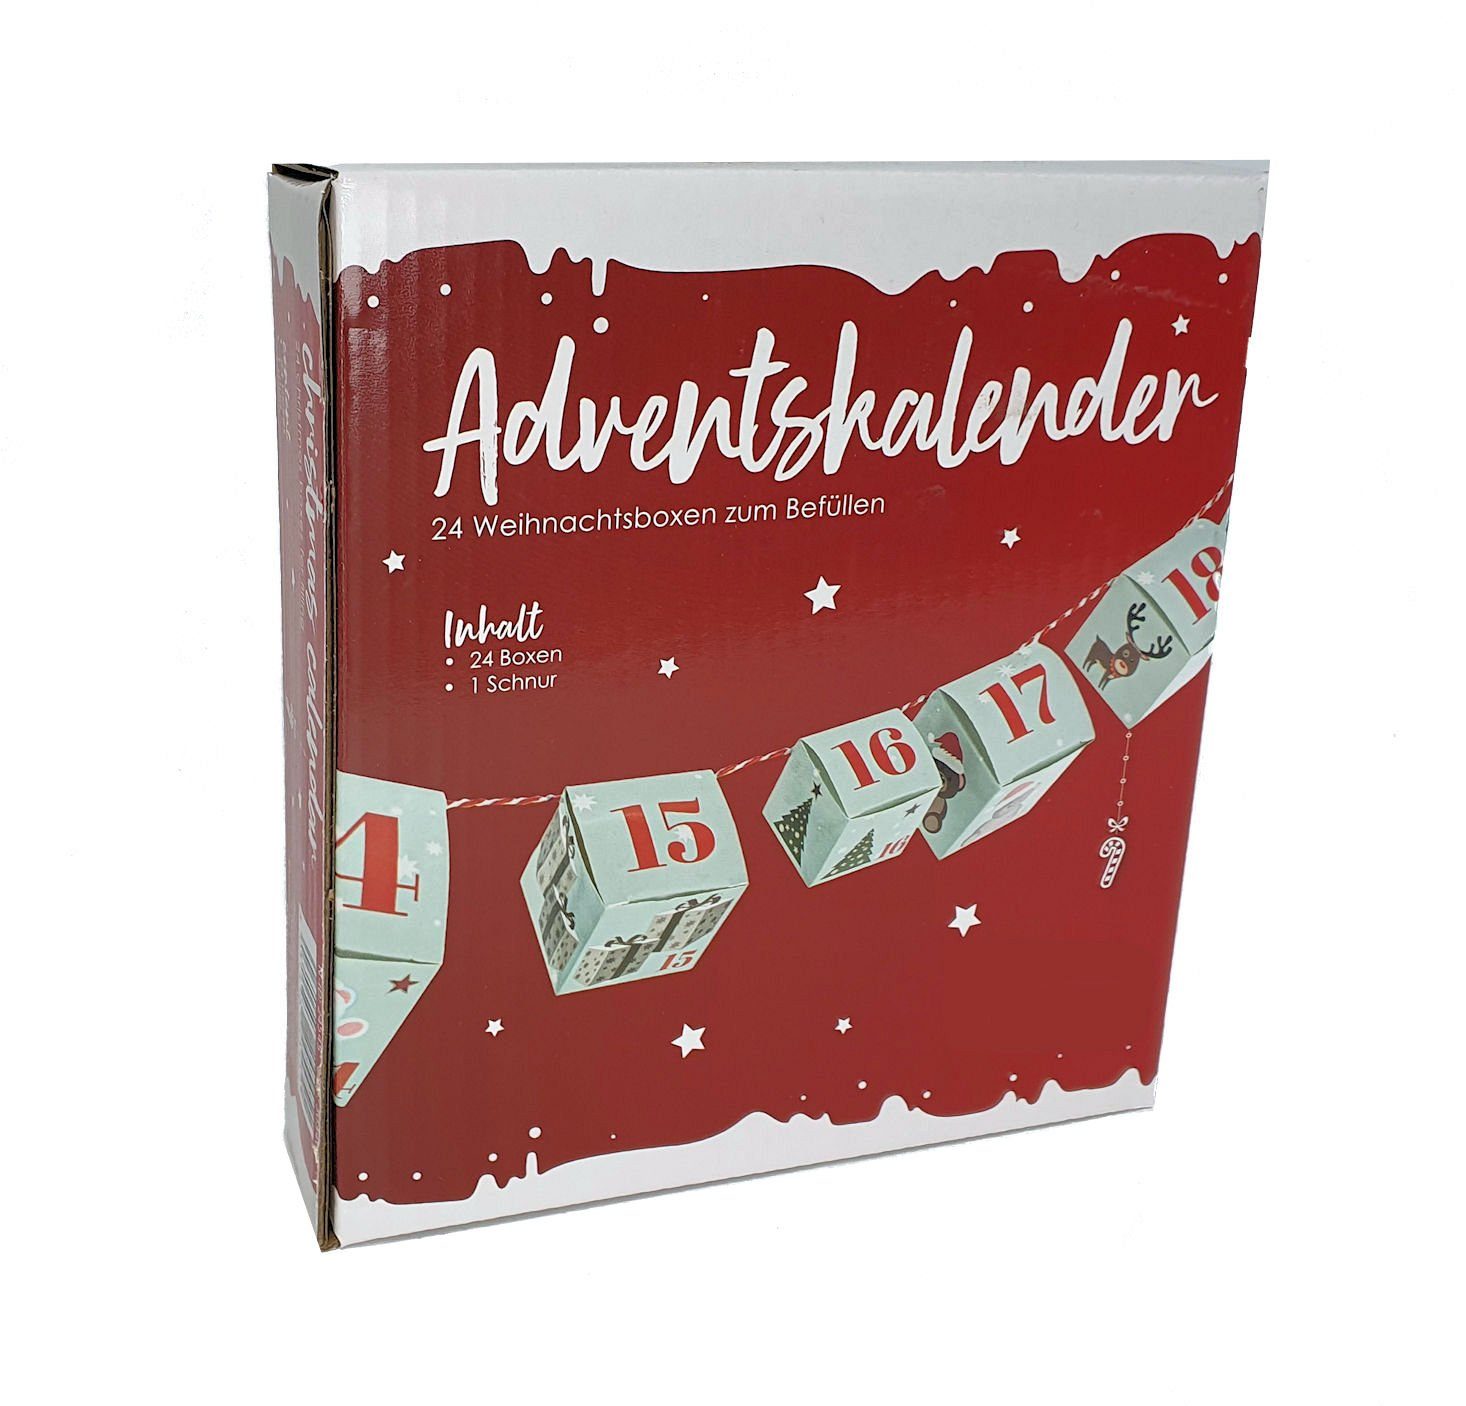 zum Befüllen zum befüllen Adventskalender Weihnachtsboxen Spetebo - befüllbarer 24 Adventskalender,